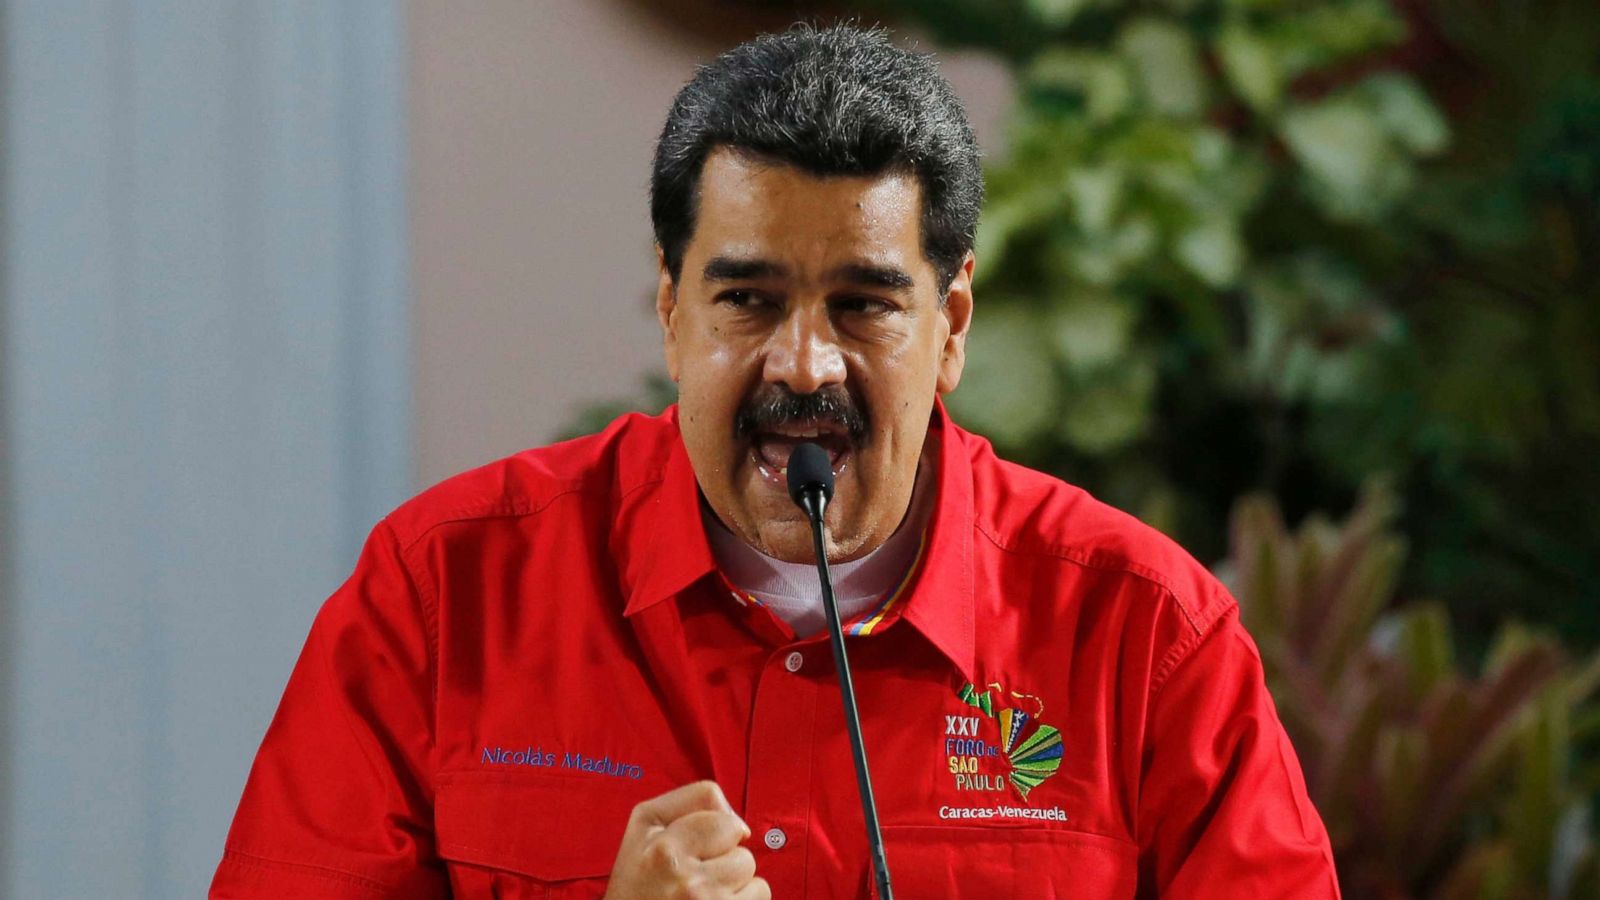 Nicolás Maduro Wallpapers - Top Free Nicolás Maduro Backgrounds ...